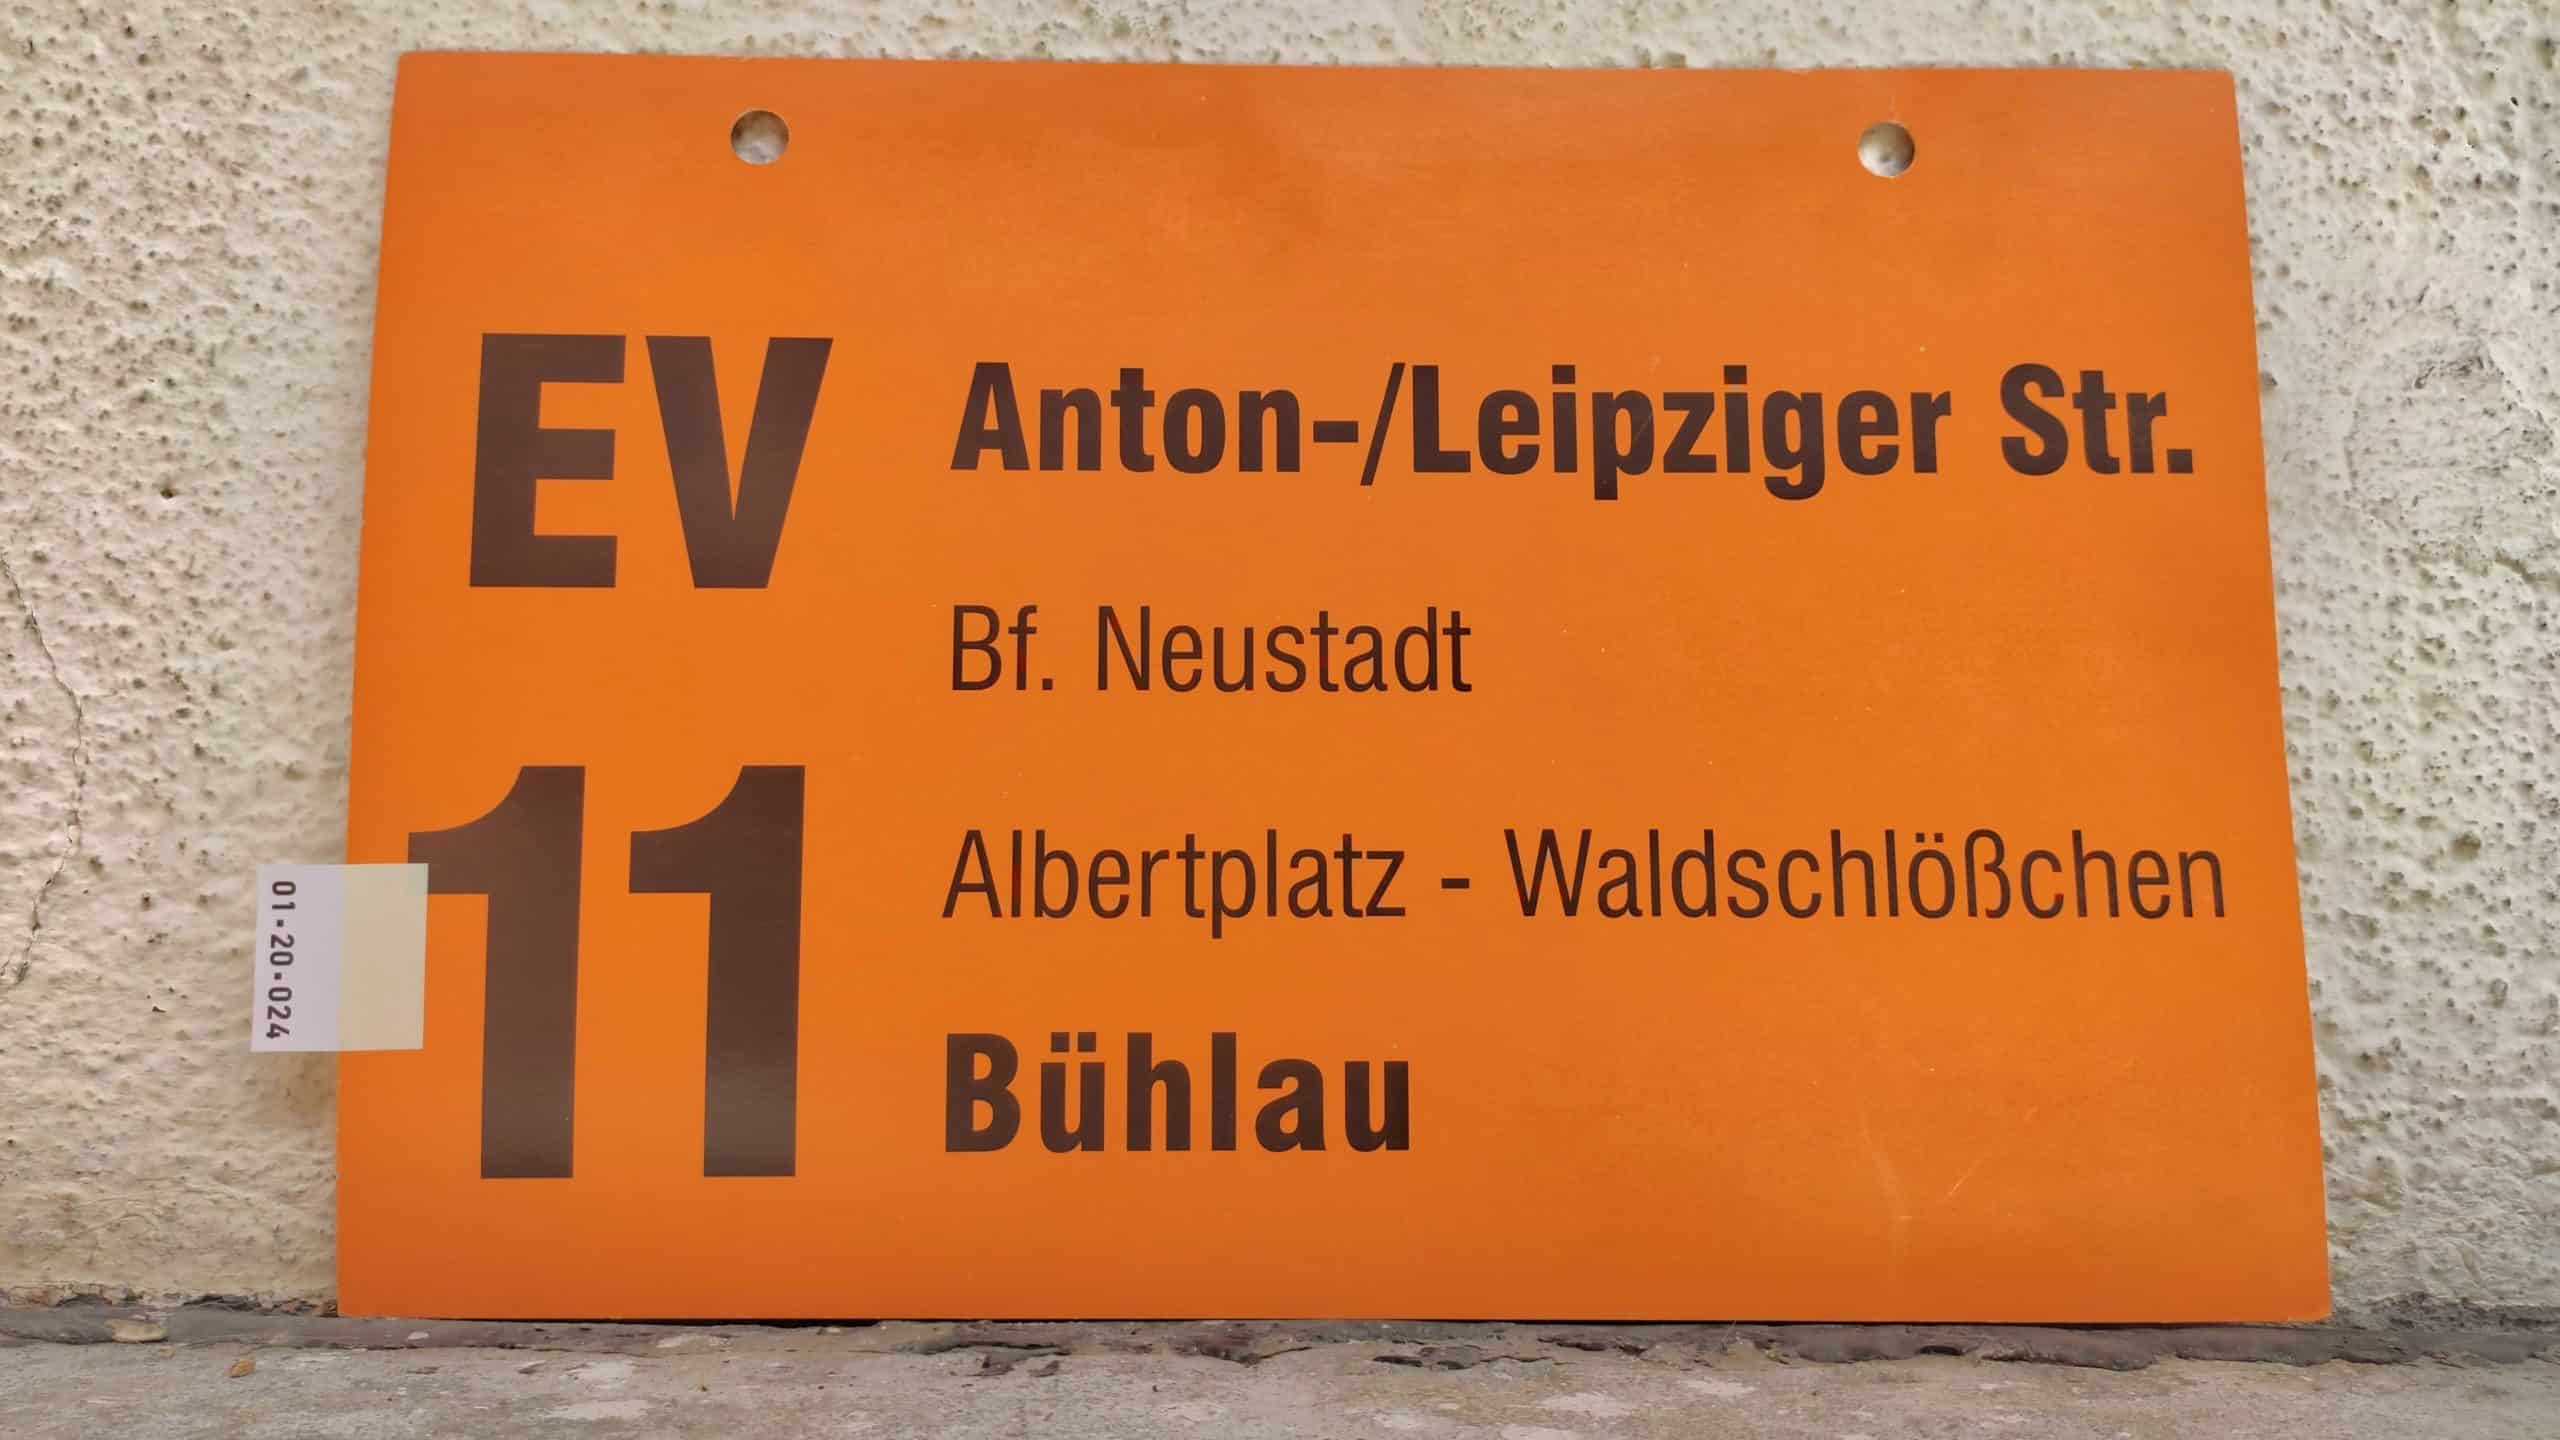 EV 11 Anton-/Leipziger Str. – Bühlau